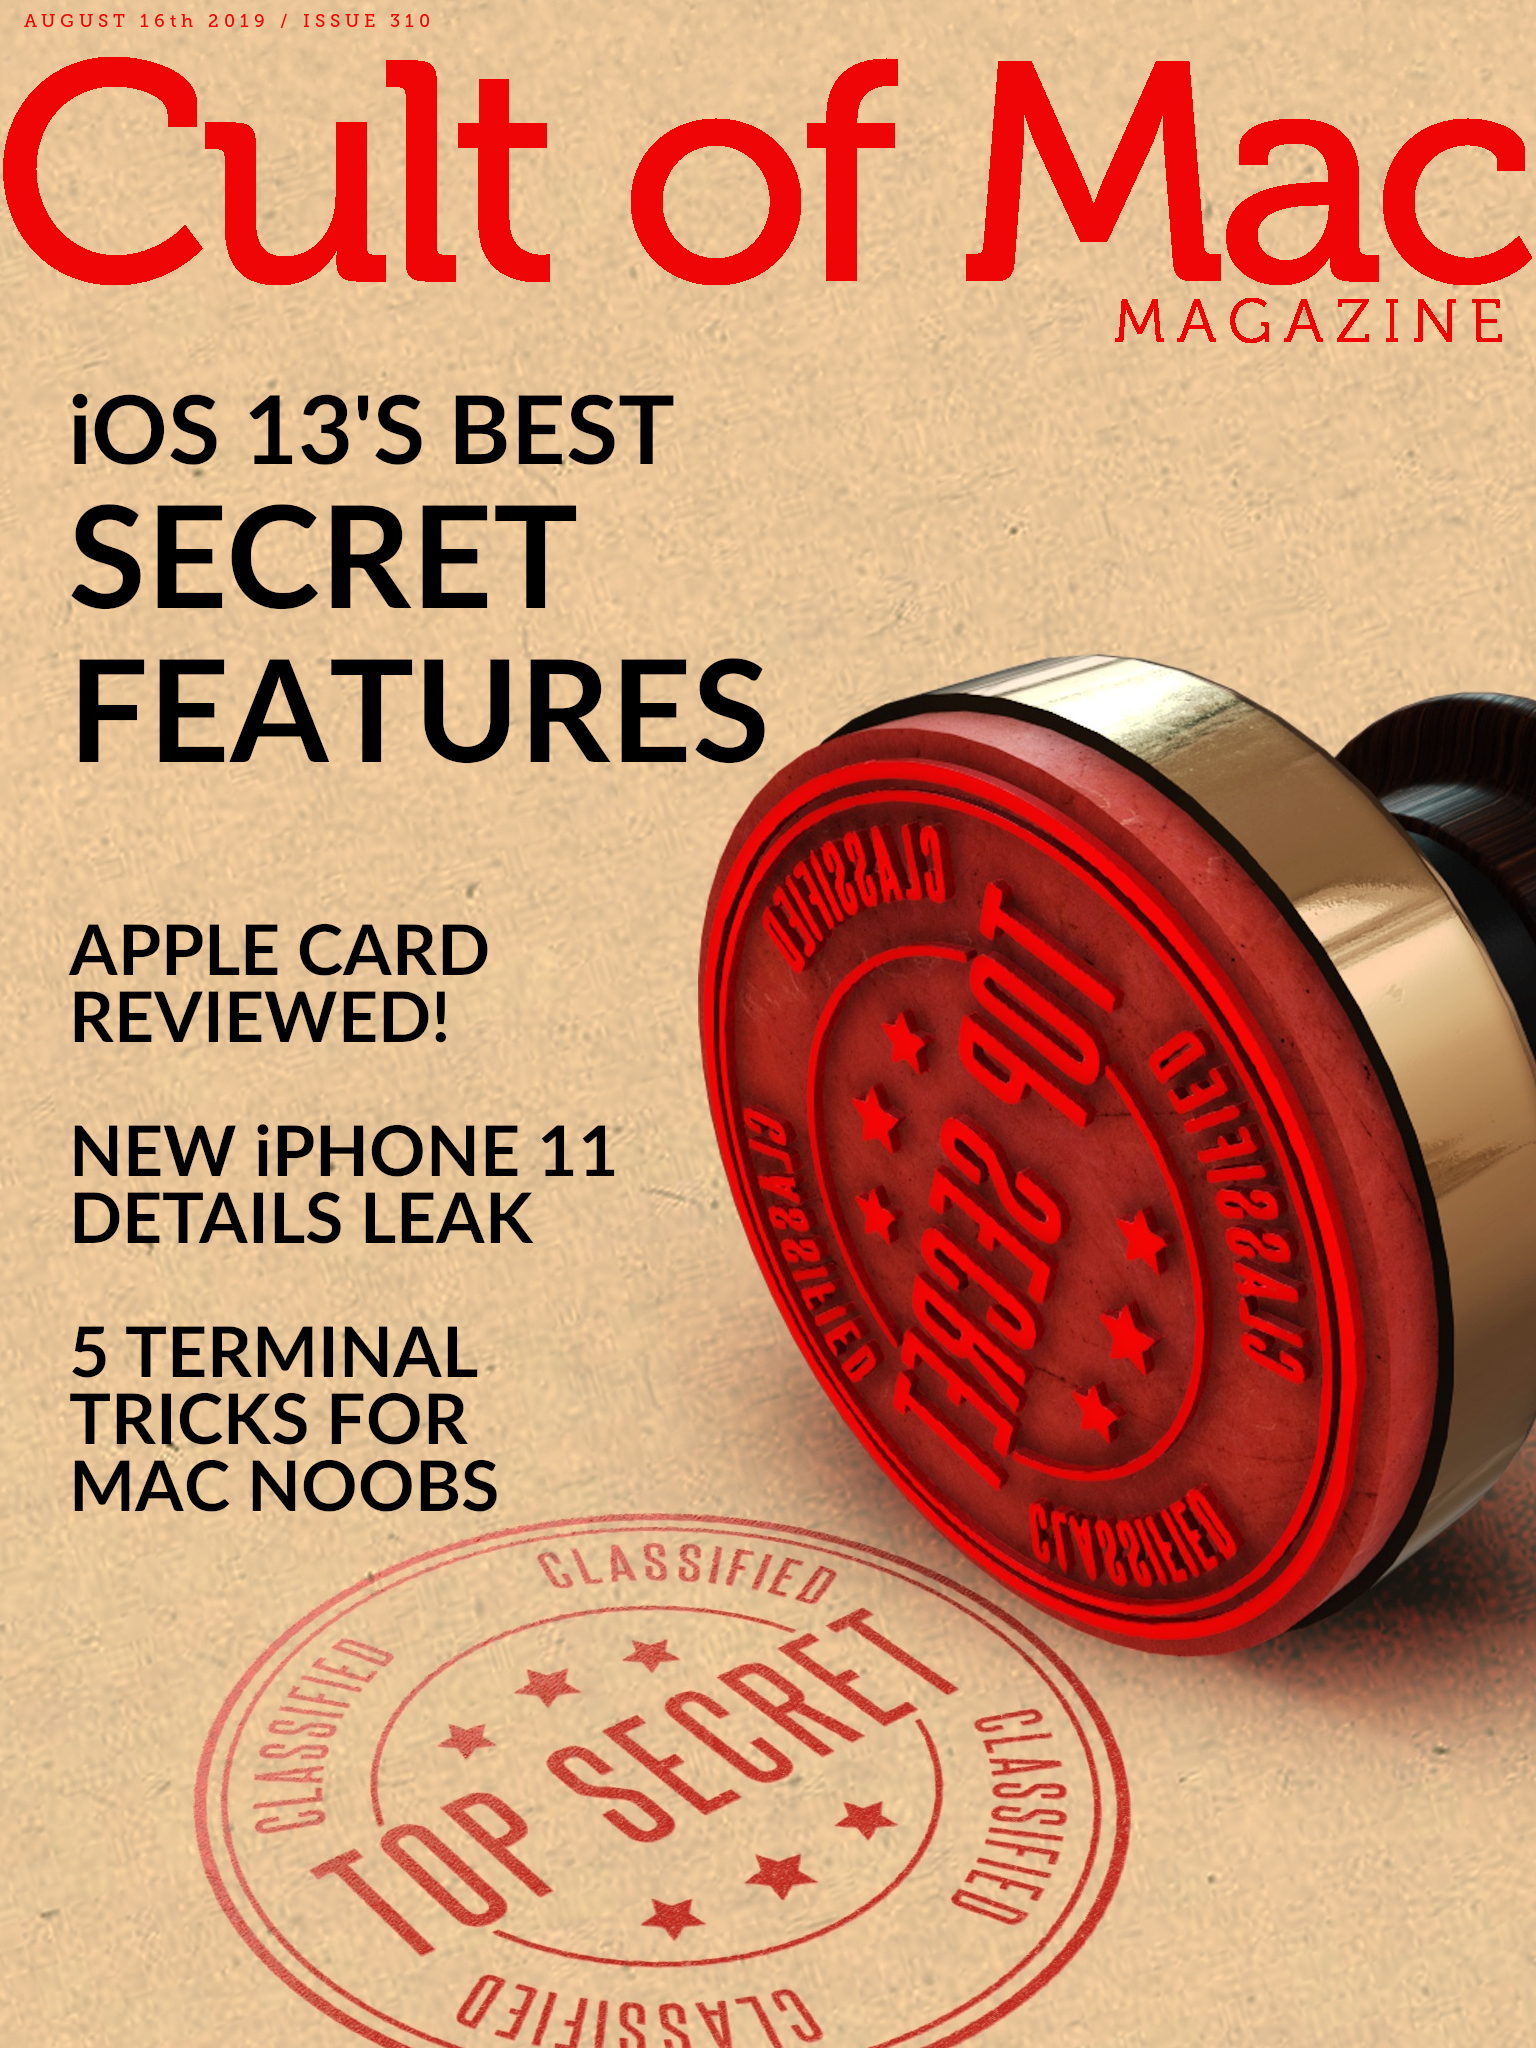 iOS 13's best secret features.